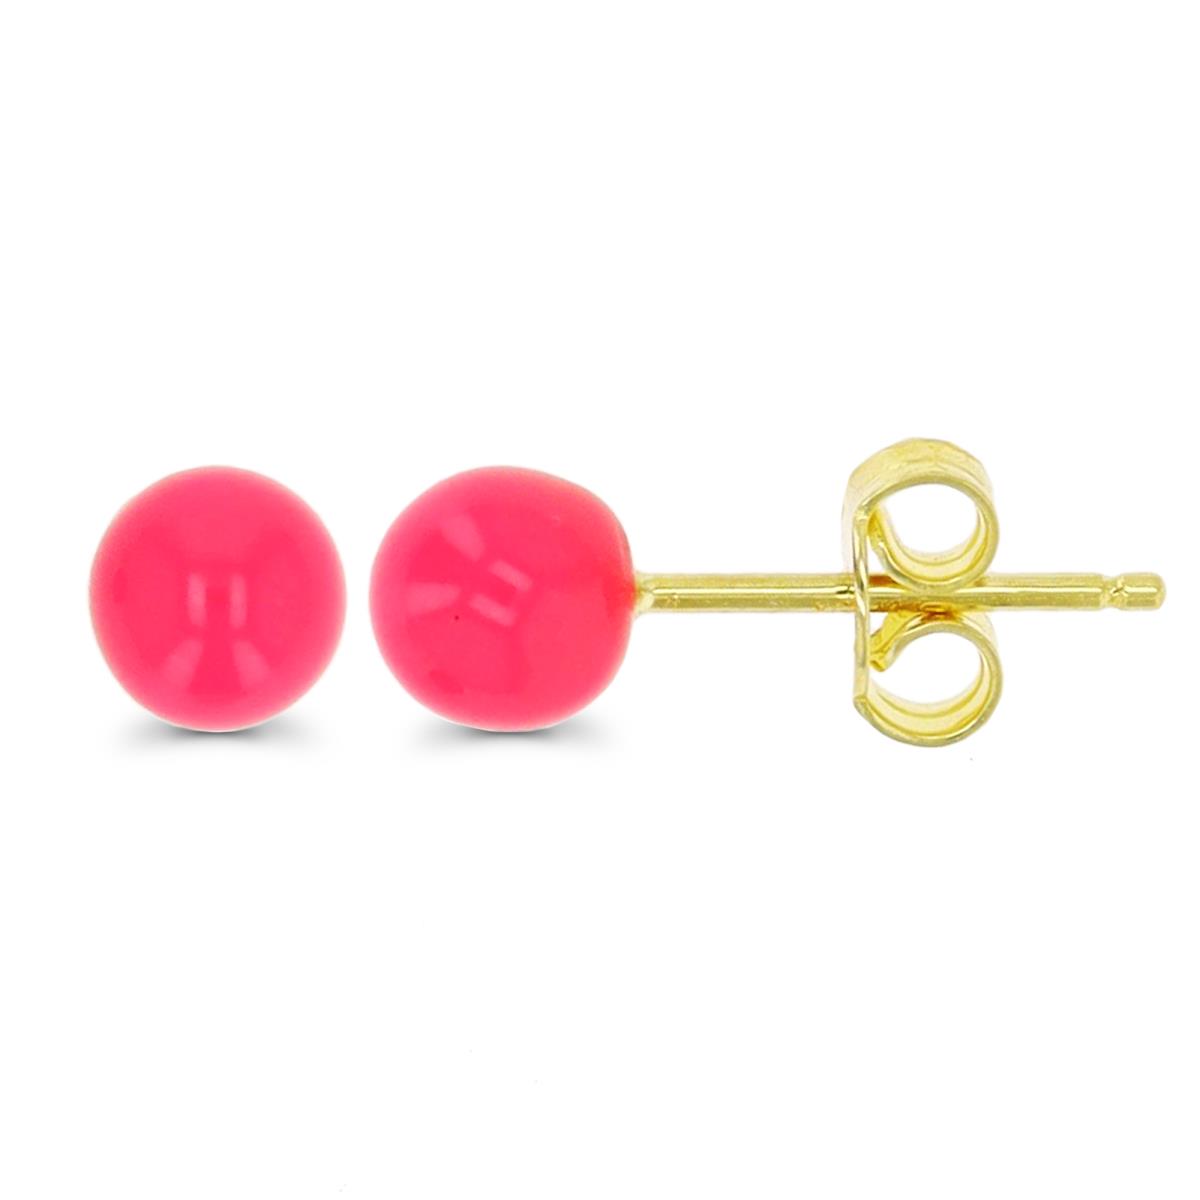 14K Yellow Gold 5mm A7 Hot Pink Enamel Ball Stud Earring